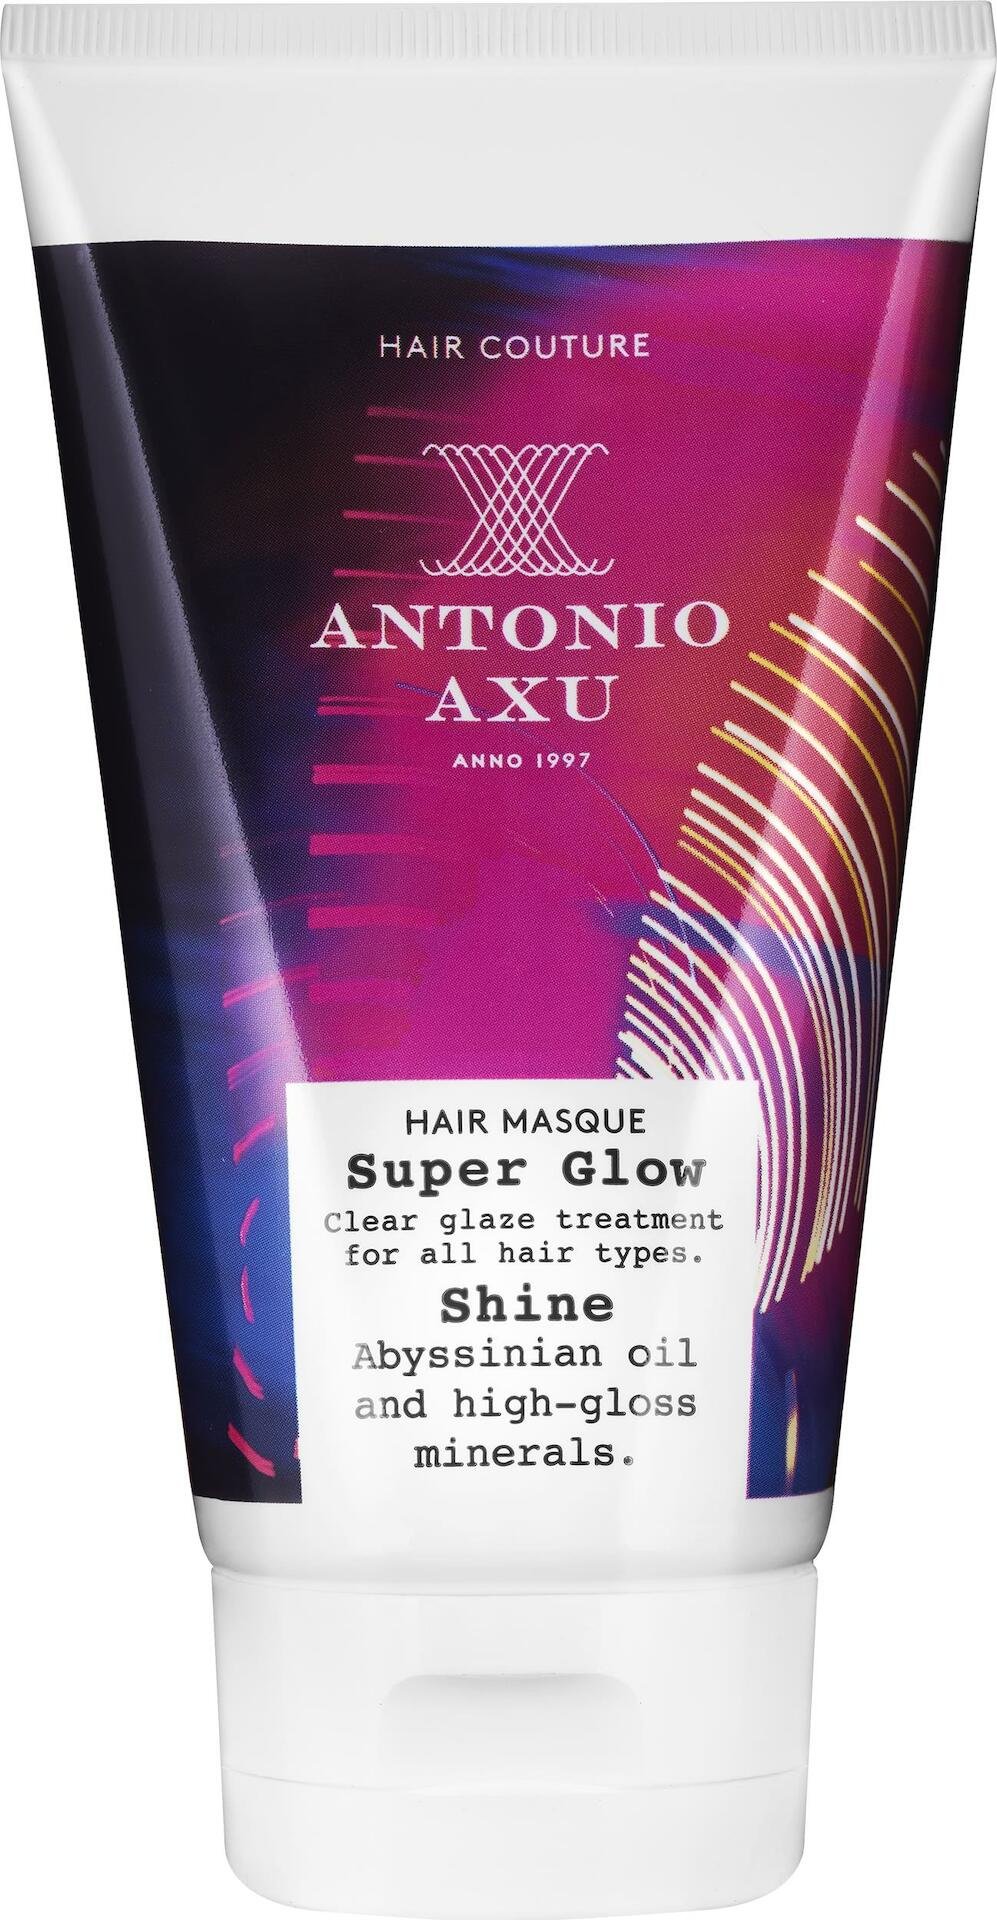 Antonio Axu Hair Masque Super Glow 150ml